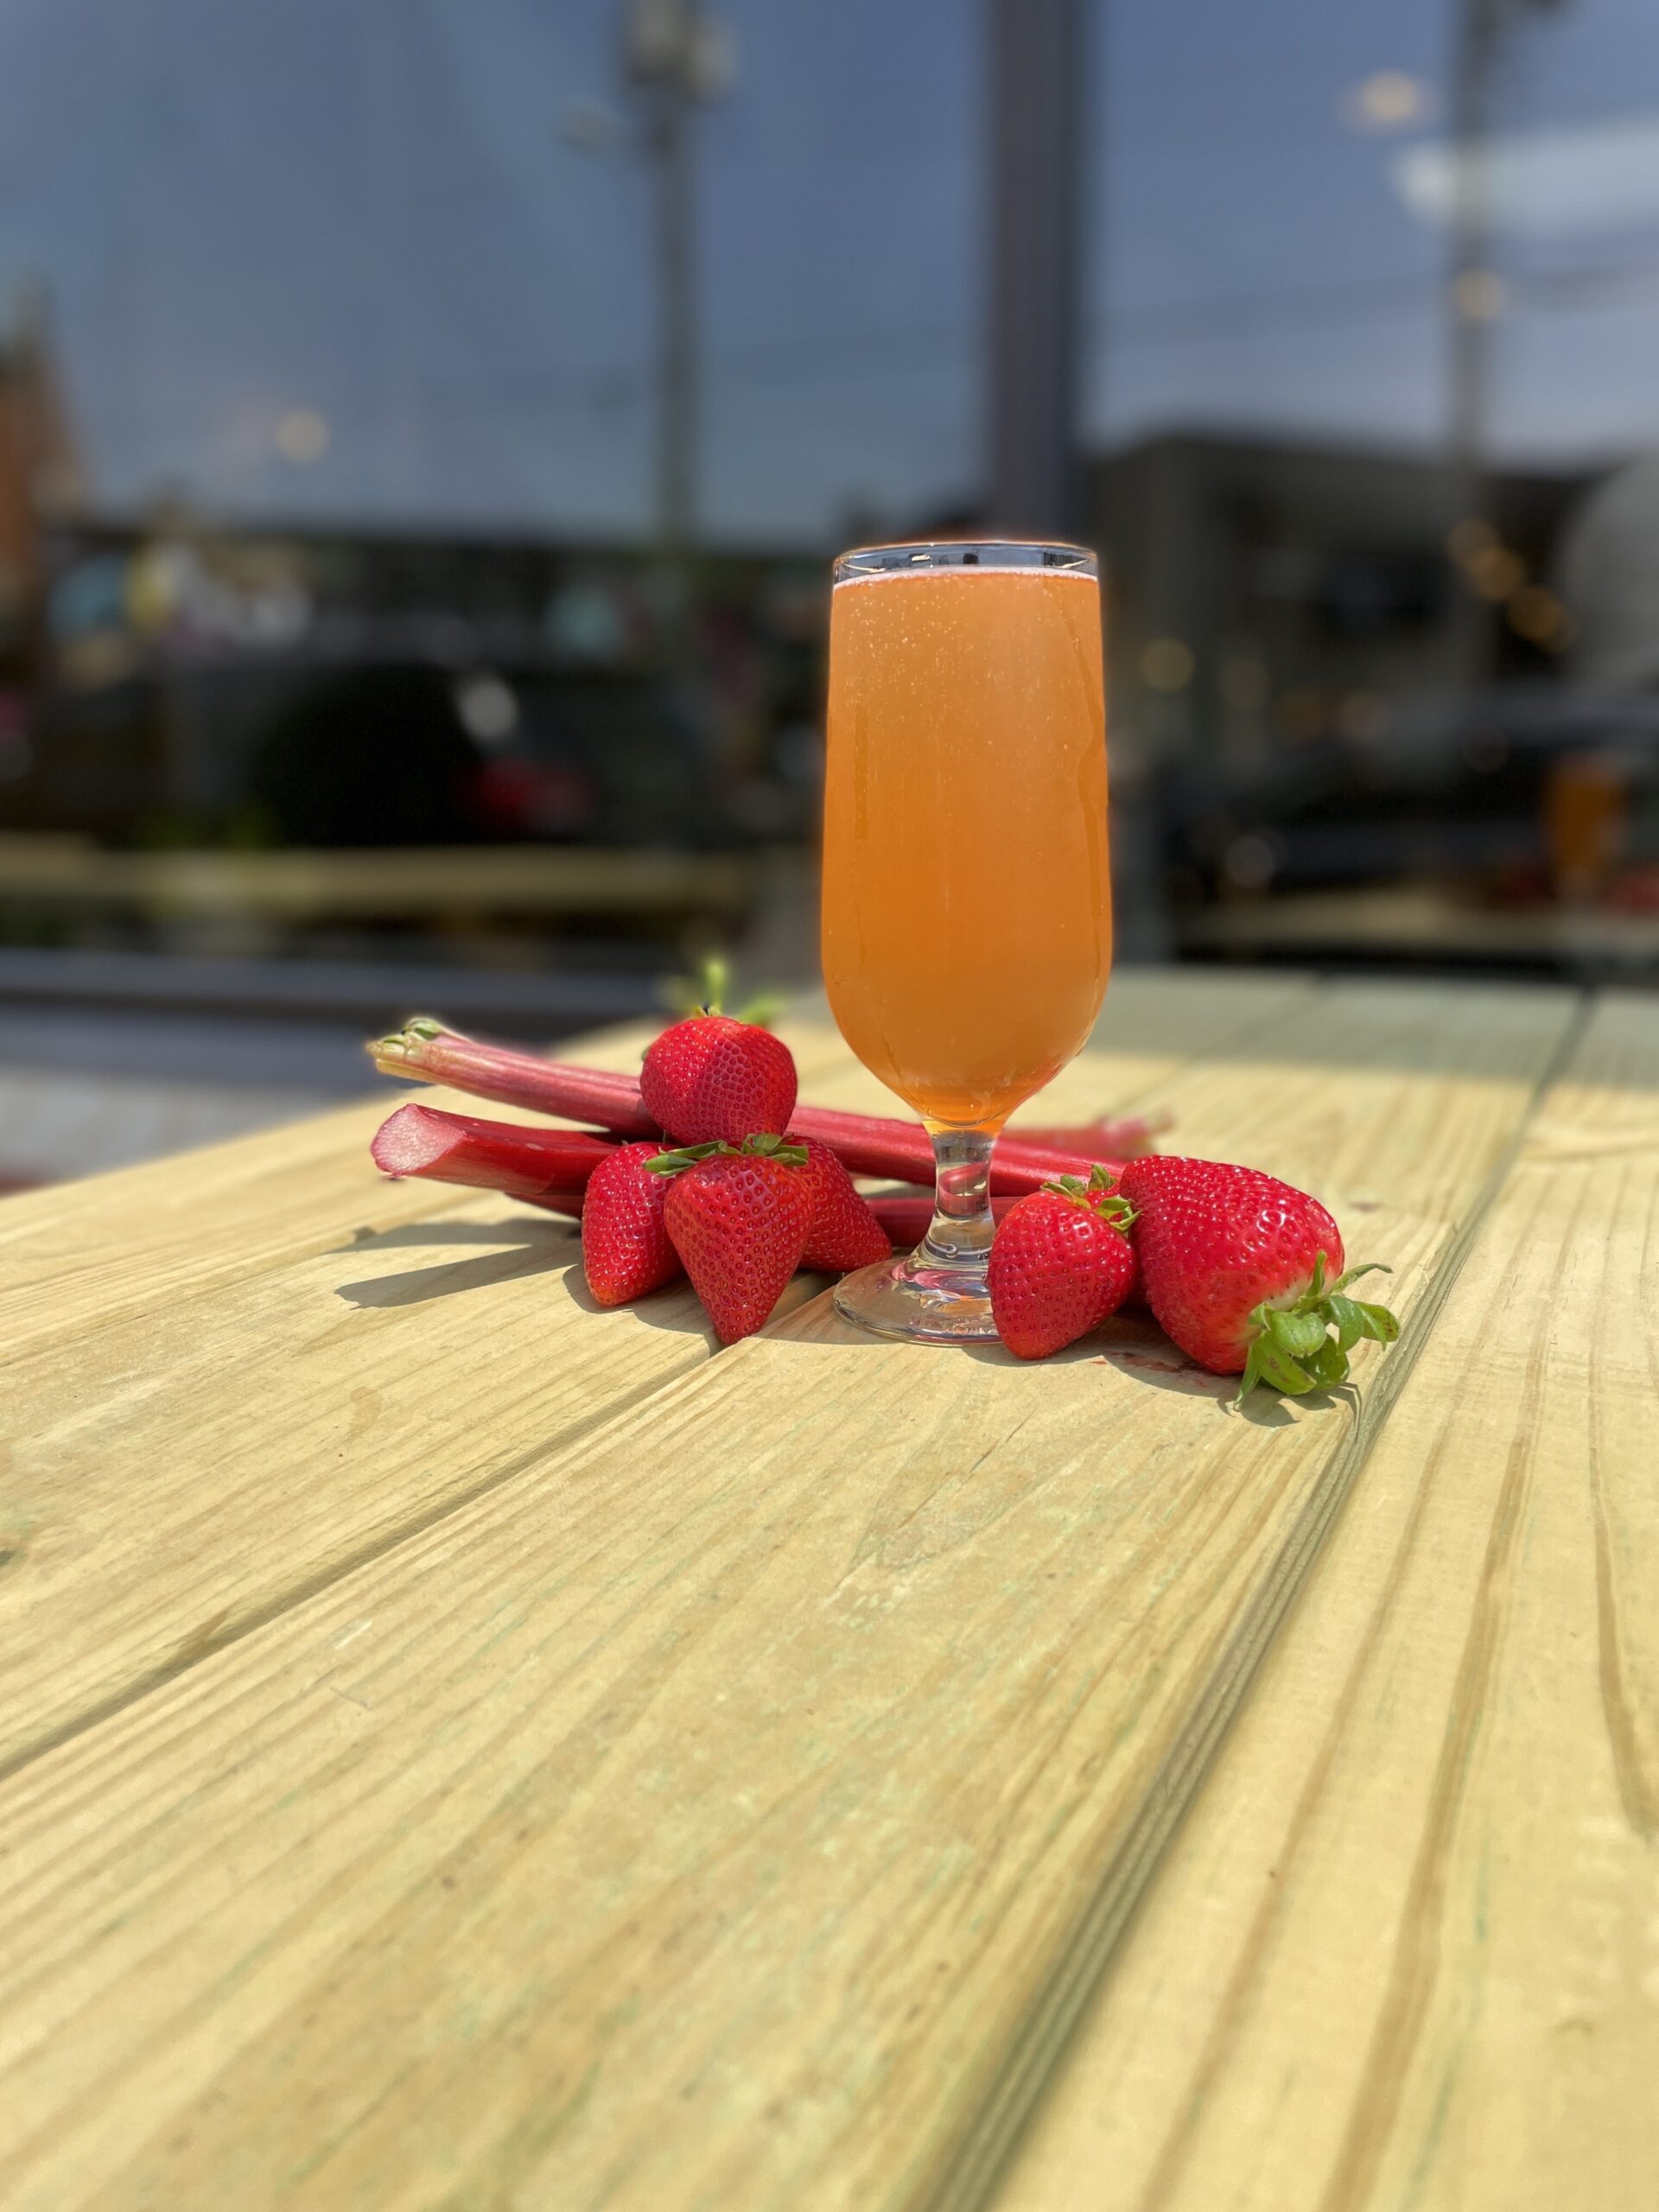 New Cider Alert: Strawberry Rhubarb Cider